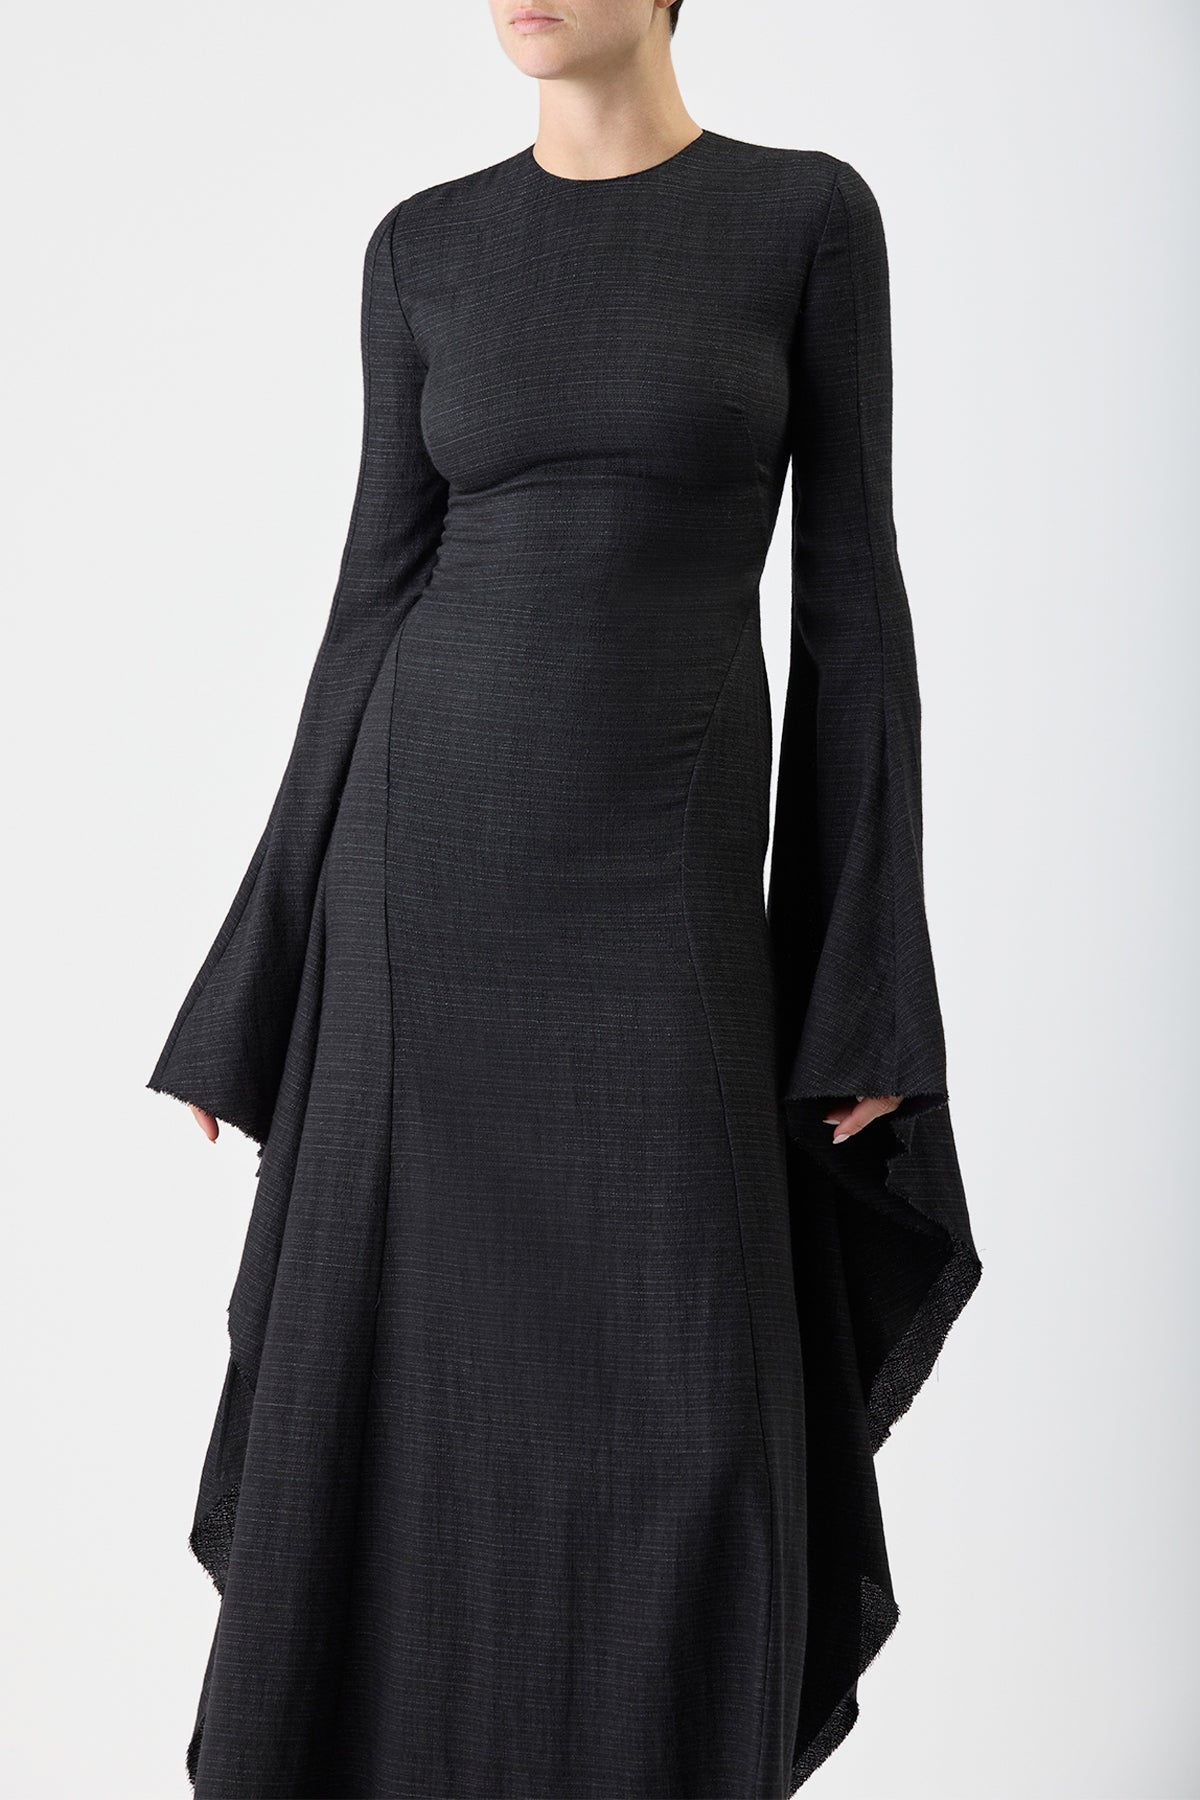 Sigrud Draped Dress in Silk Wool Gauze - 6